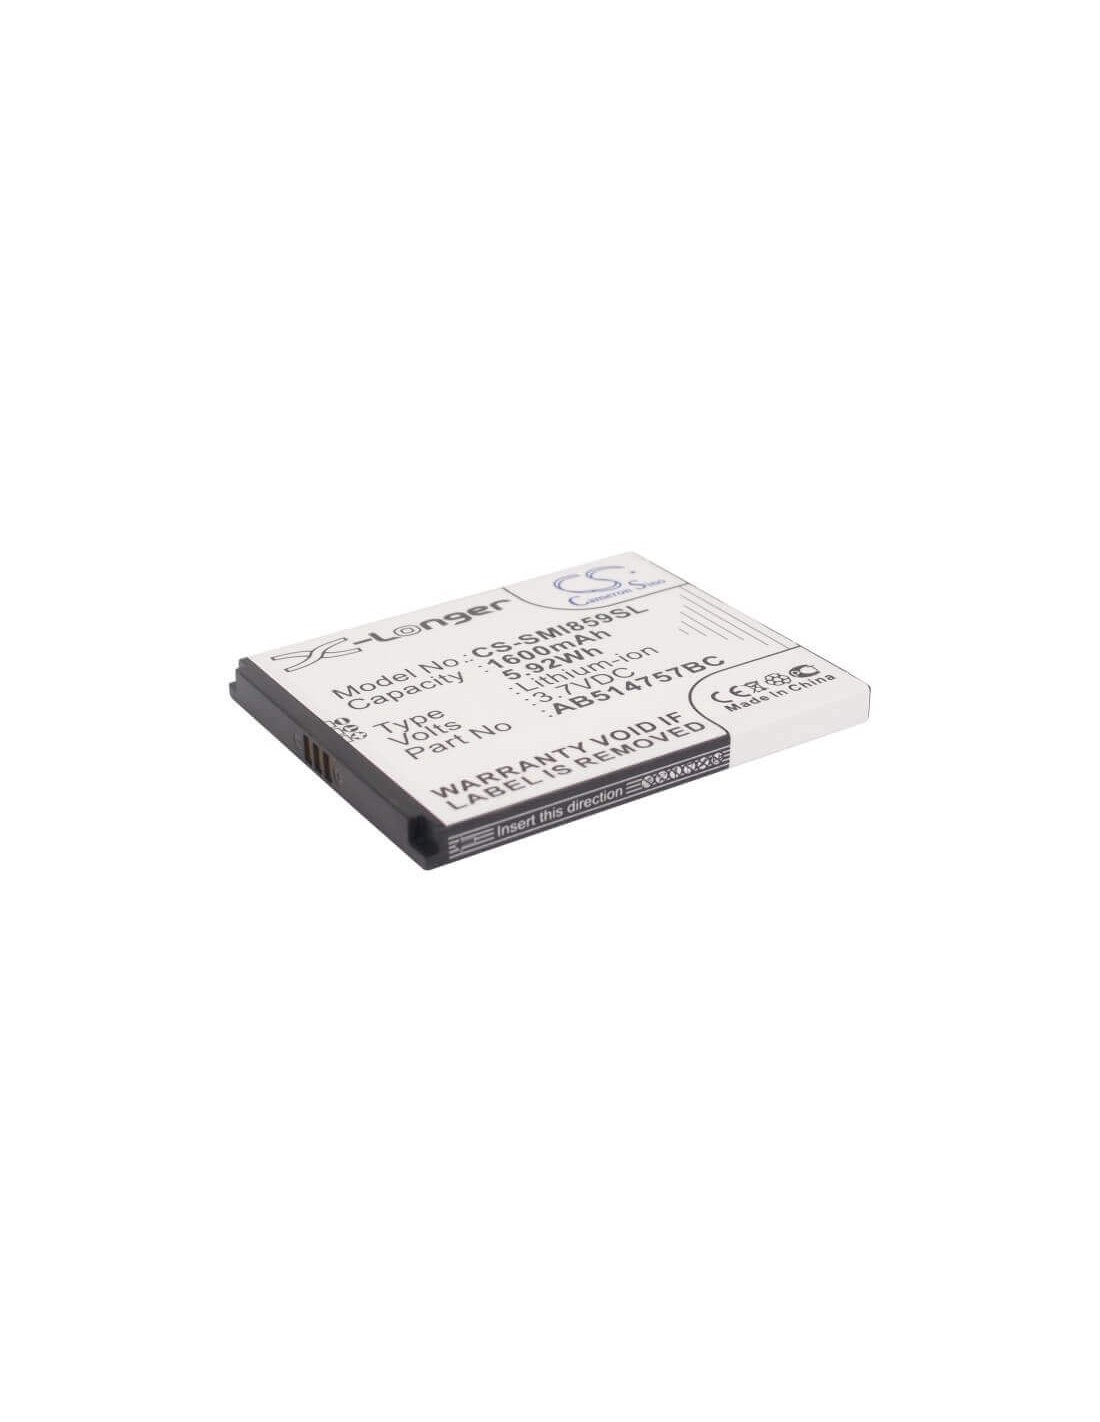 Battery for Samsung SCH-i859, SGH-I728A, SGH-I740 3.7V, 1600mAh - 5.92Wh